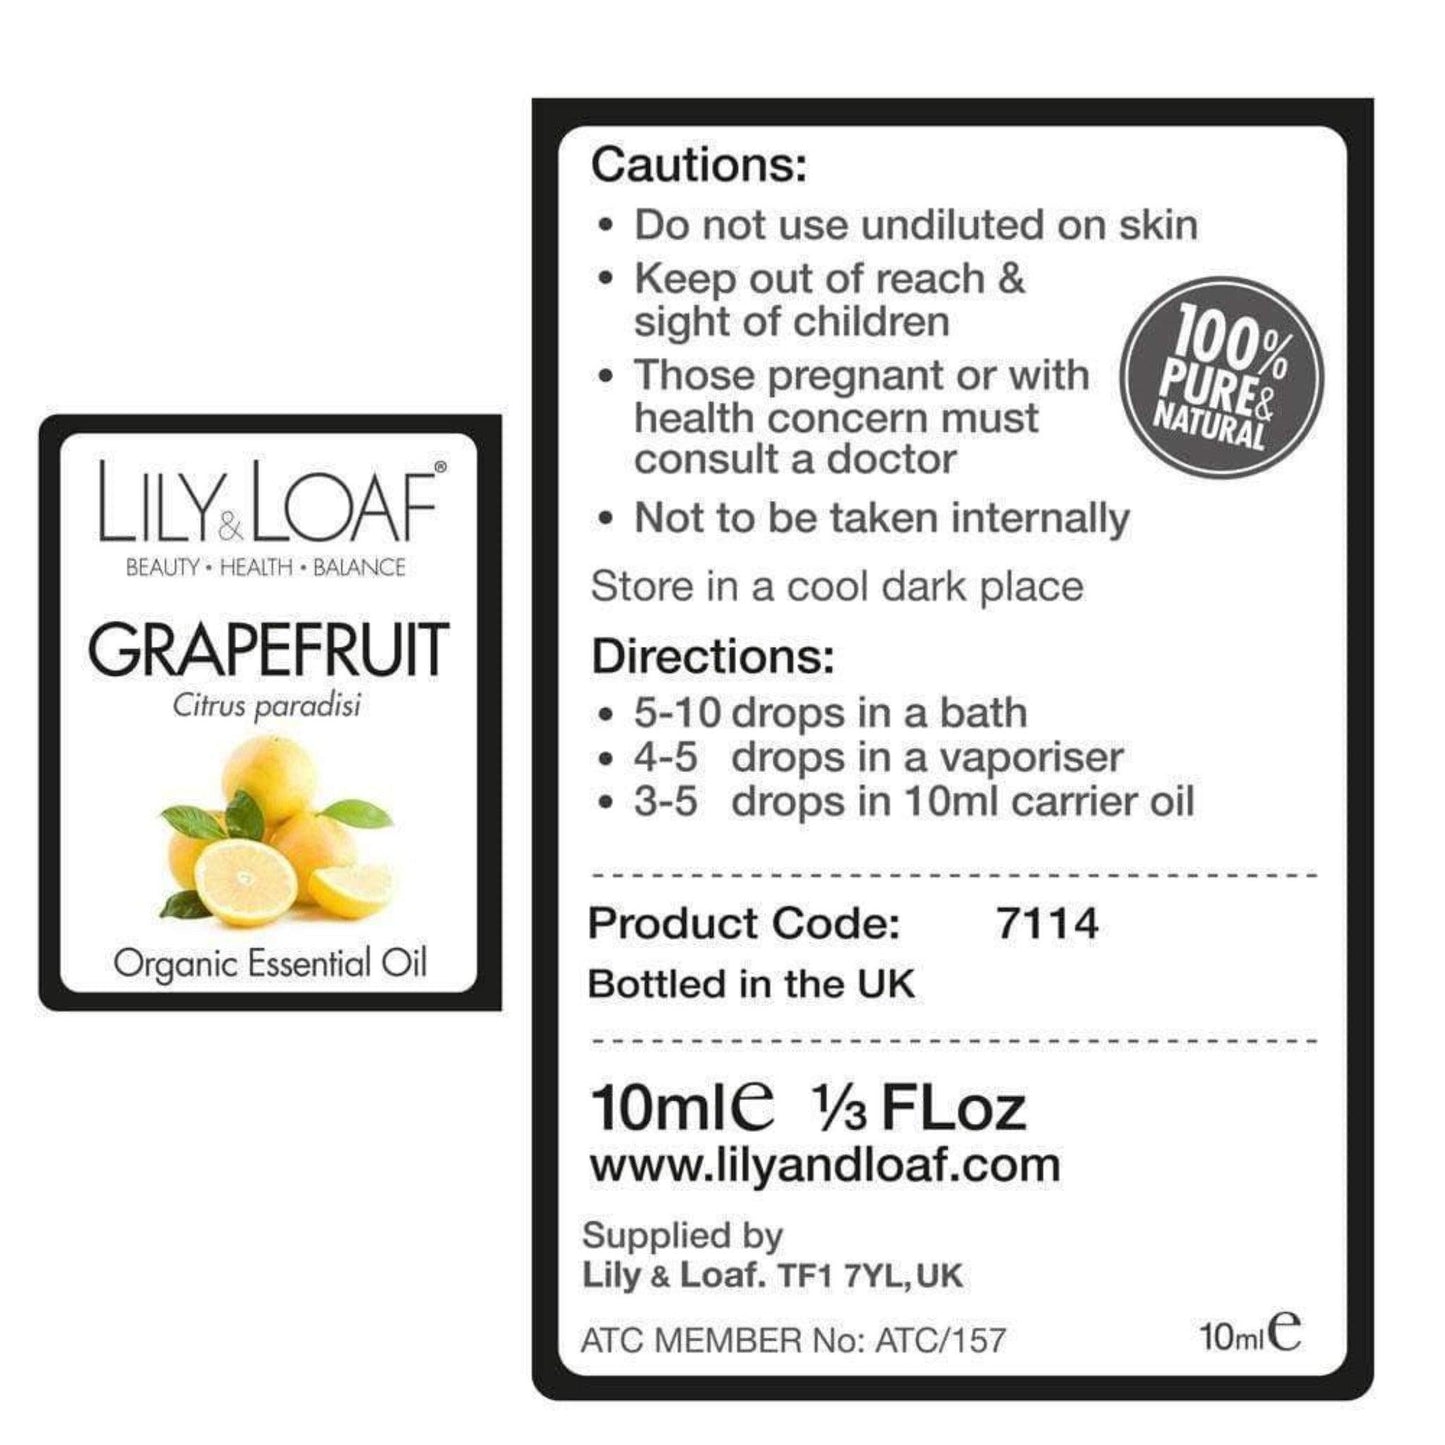 Grapefruit 10ml Organic Essential Oil label information